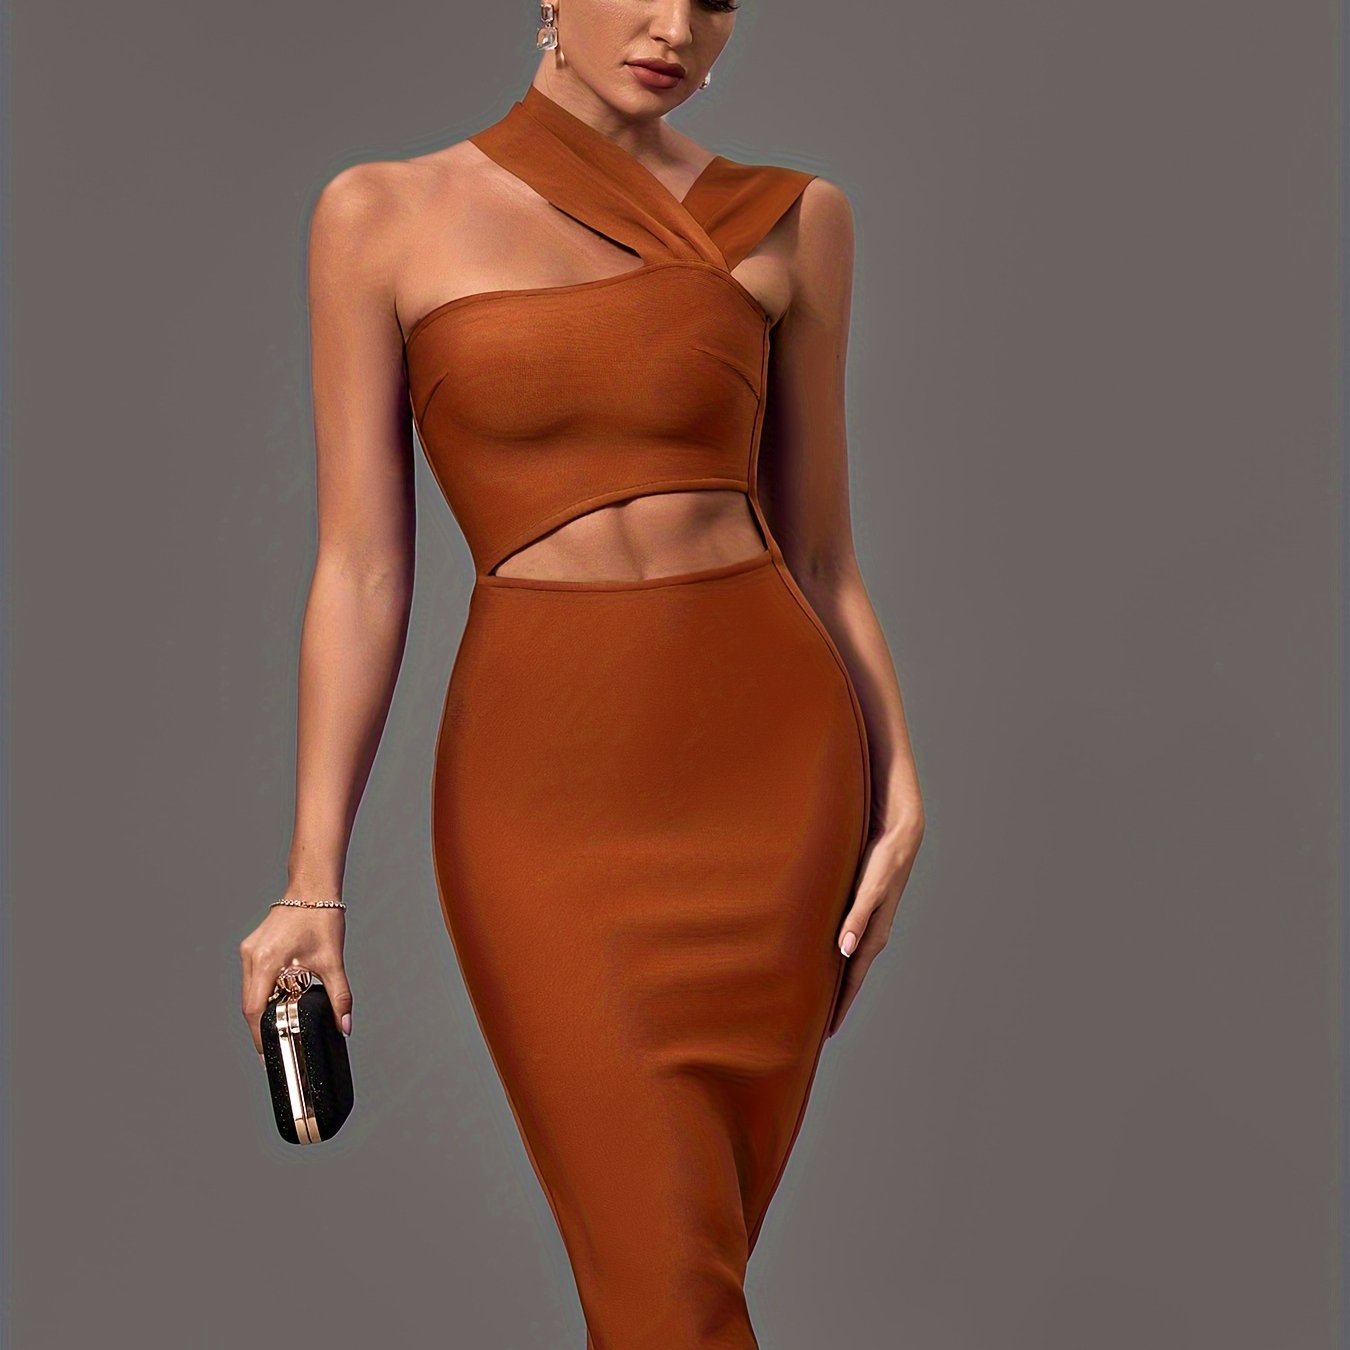 vzyzv  Cut Out Asymmetrical Dress, Sexy Bodycon Sleeveless Dress, Women's Clothing